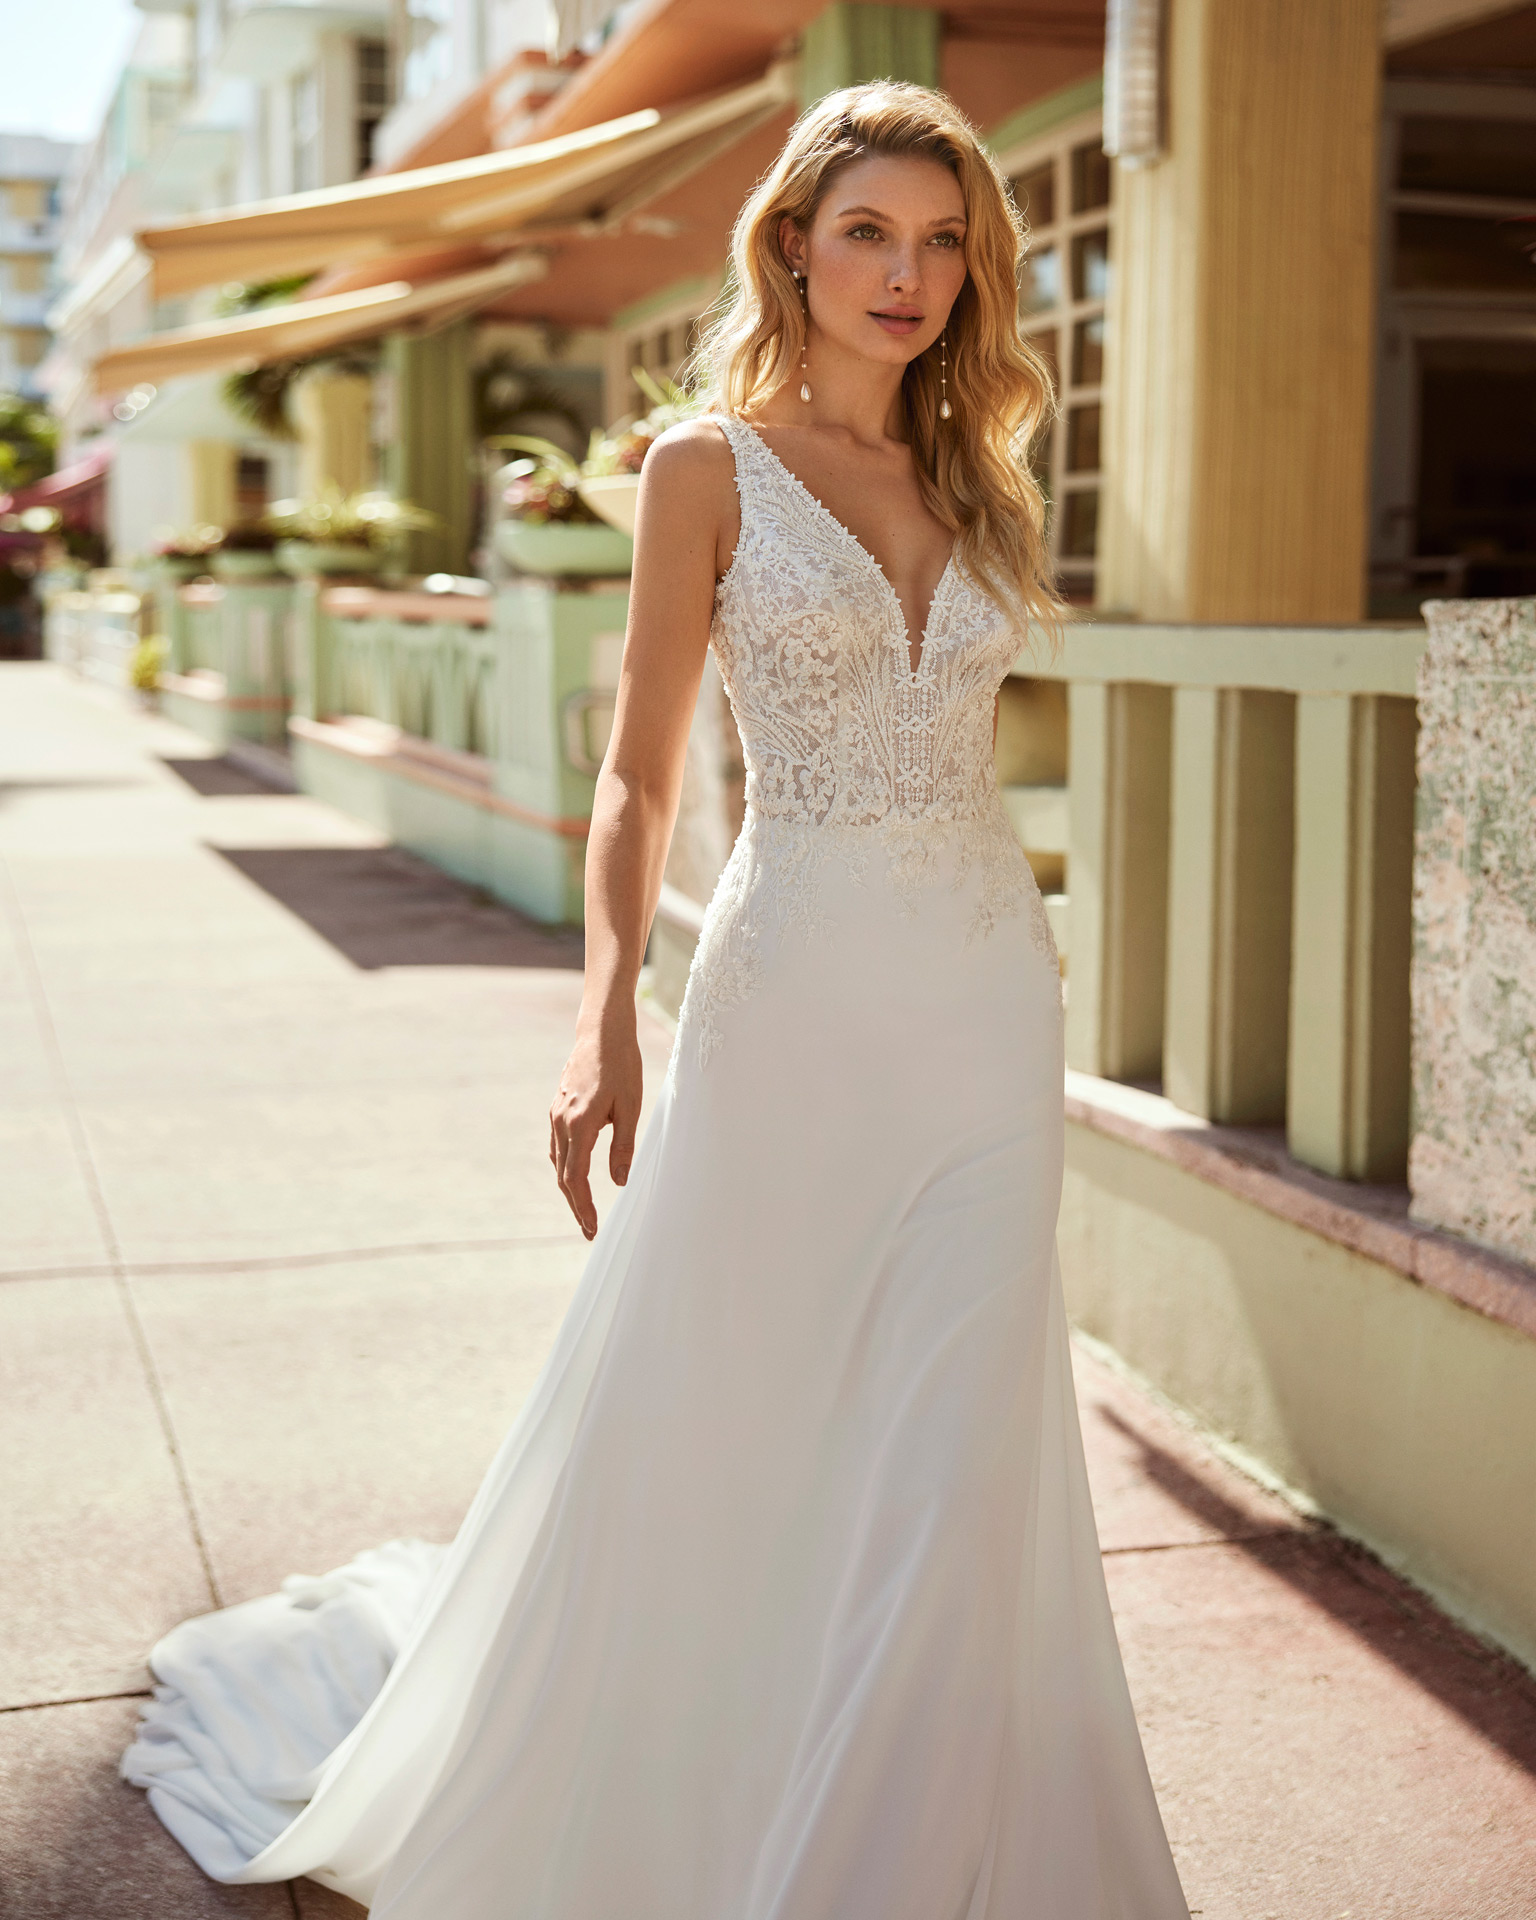 Fluid A-line wedding dress, crafted in georgette. Featuring a V-neckline, buttoned back, and straps. Show off this on-trend Luna Novias design. LUNA_NOVIAS.